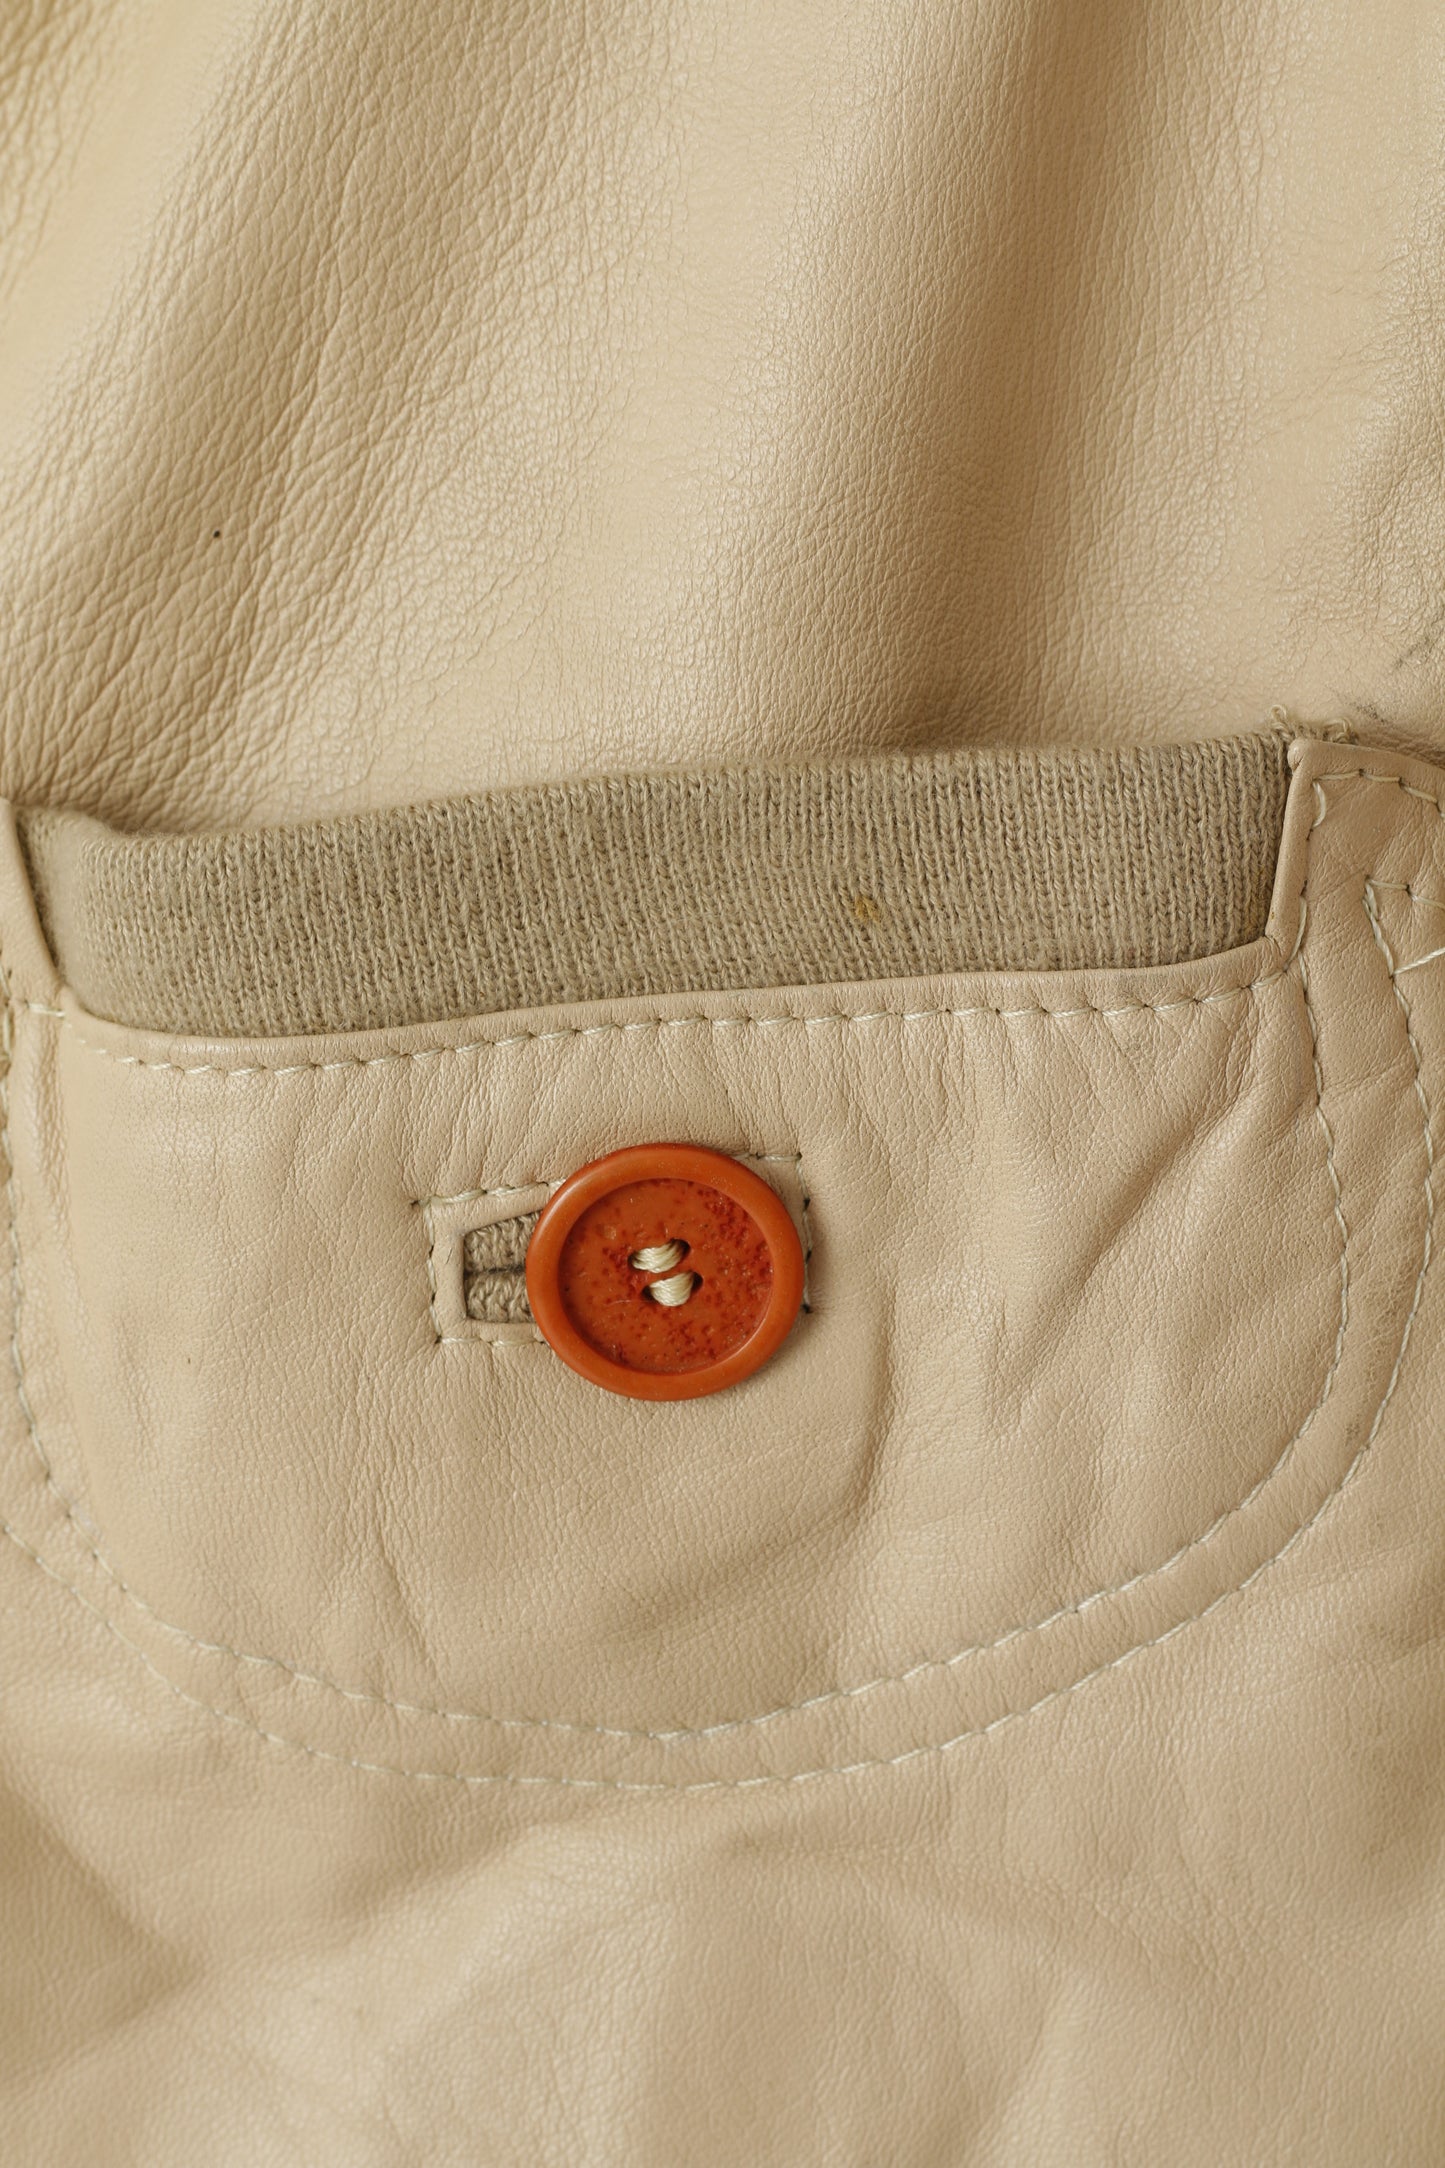 Vintage Men 50 M Leather Jacket Beige Bomber Pockets Vera Pelle Made in Italy Top